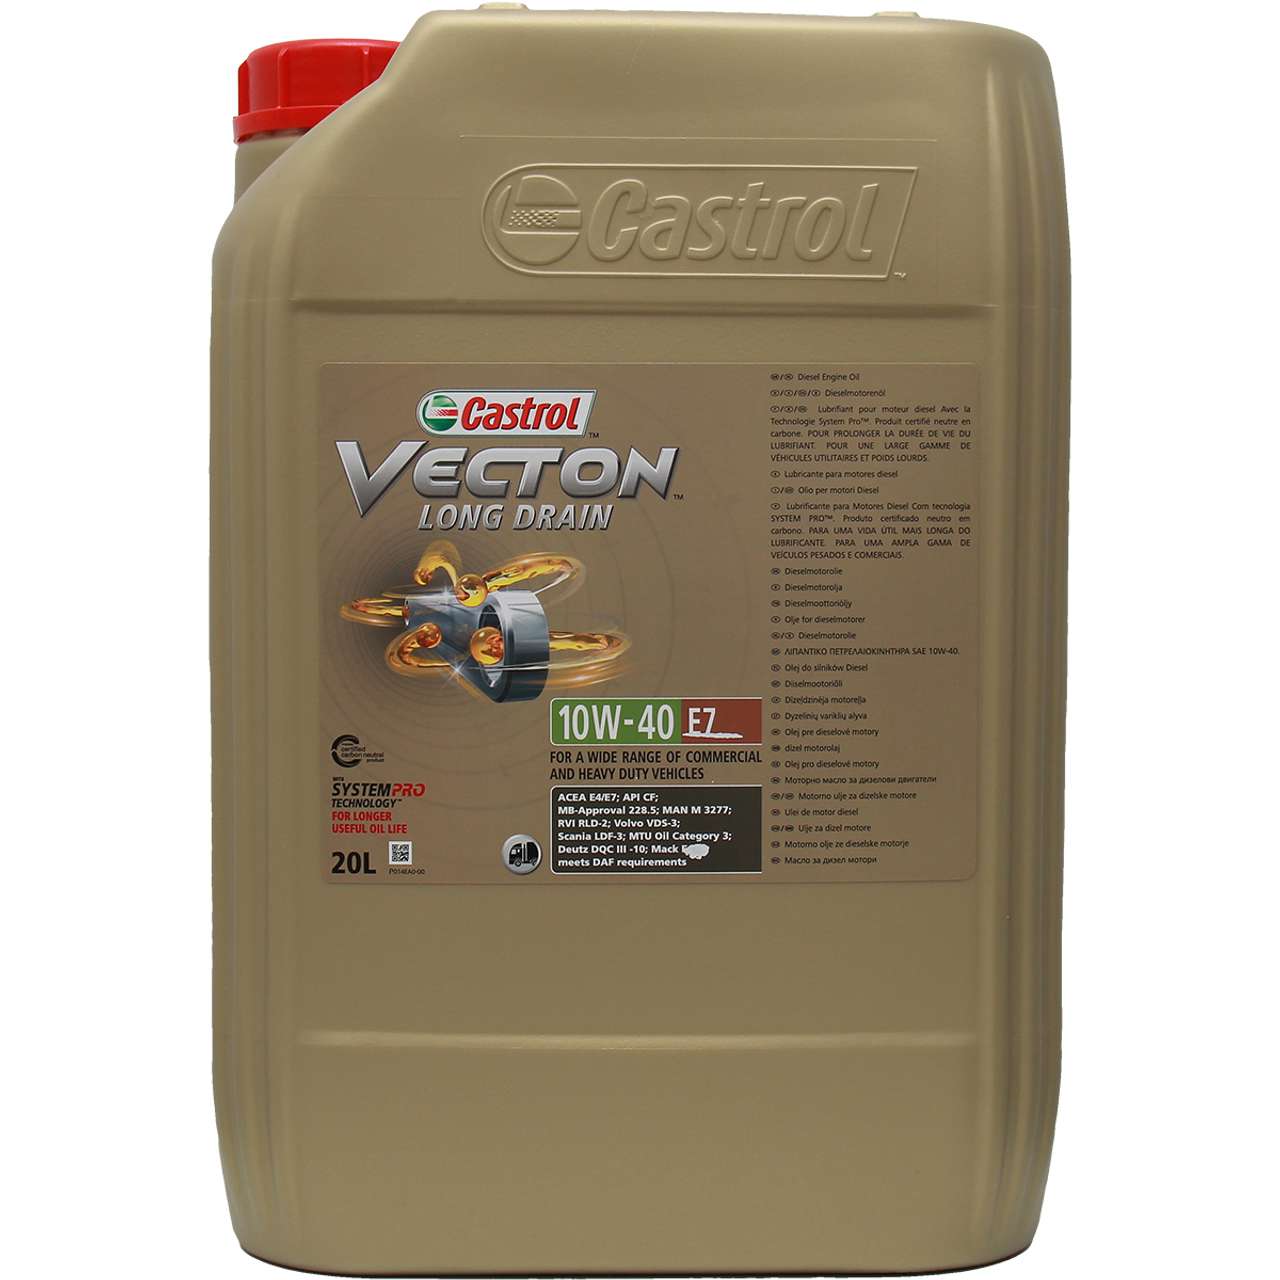 Castrol Vecton Long Drain 10W-40 E7 20 Liter